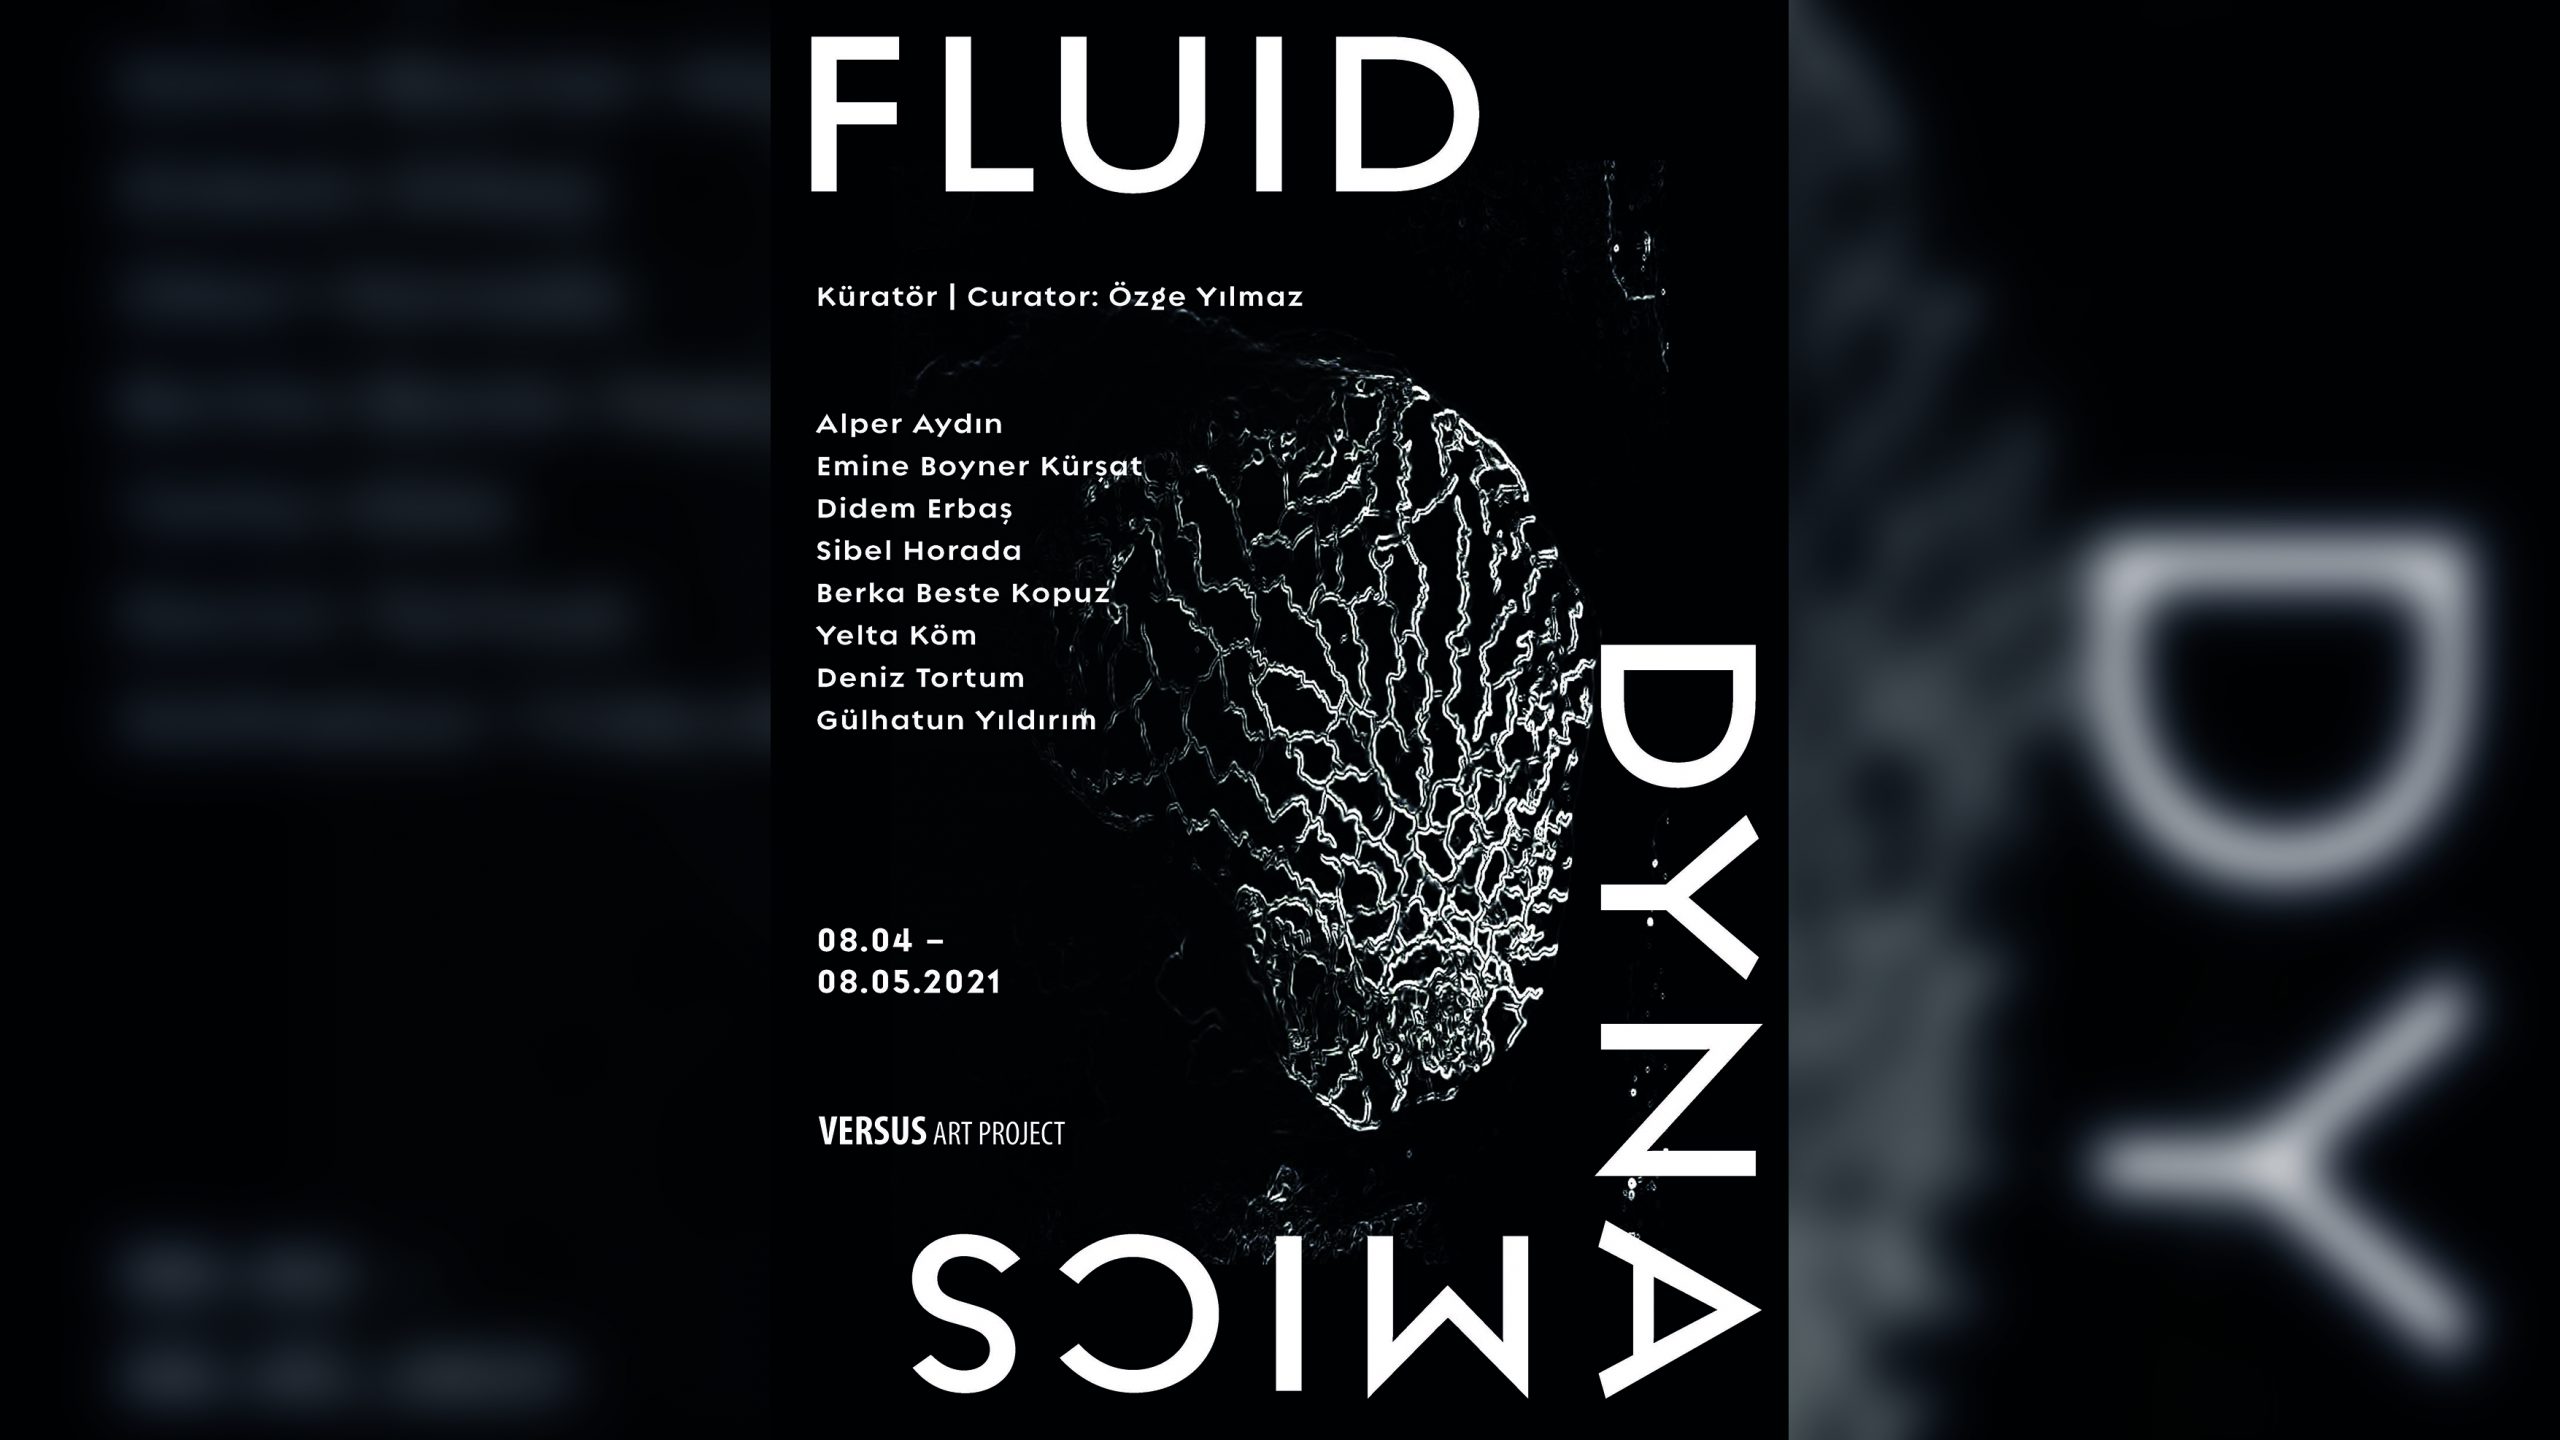 Fluid Dynamics Exhibition opens at Versus Art Project

